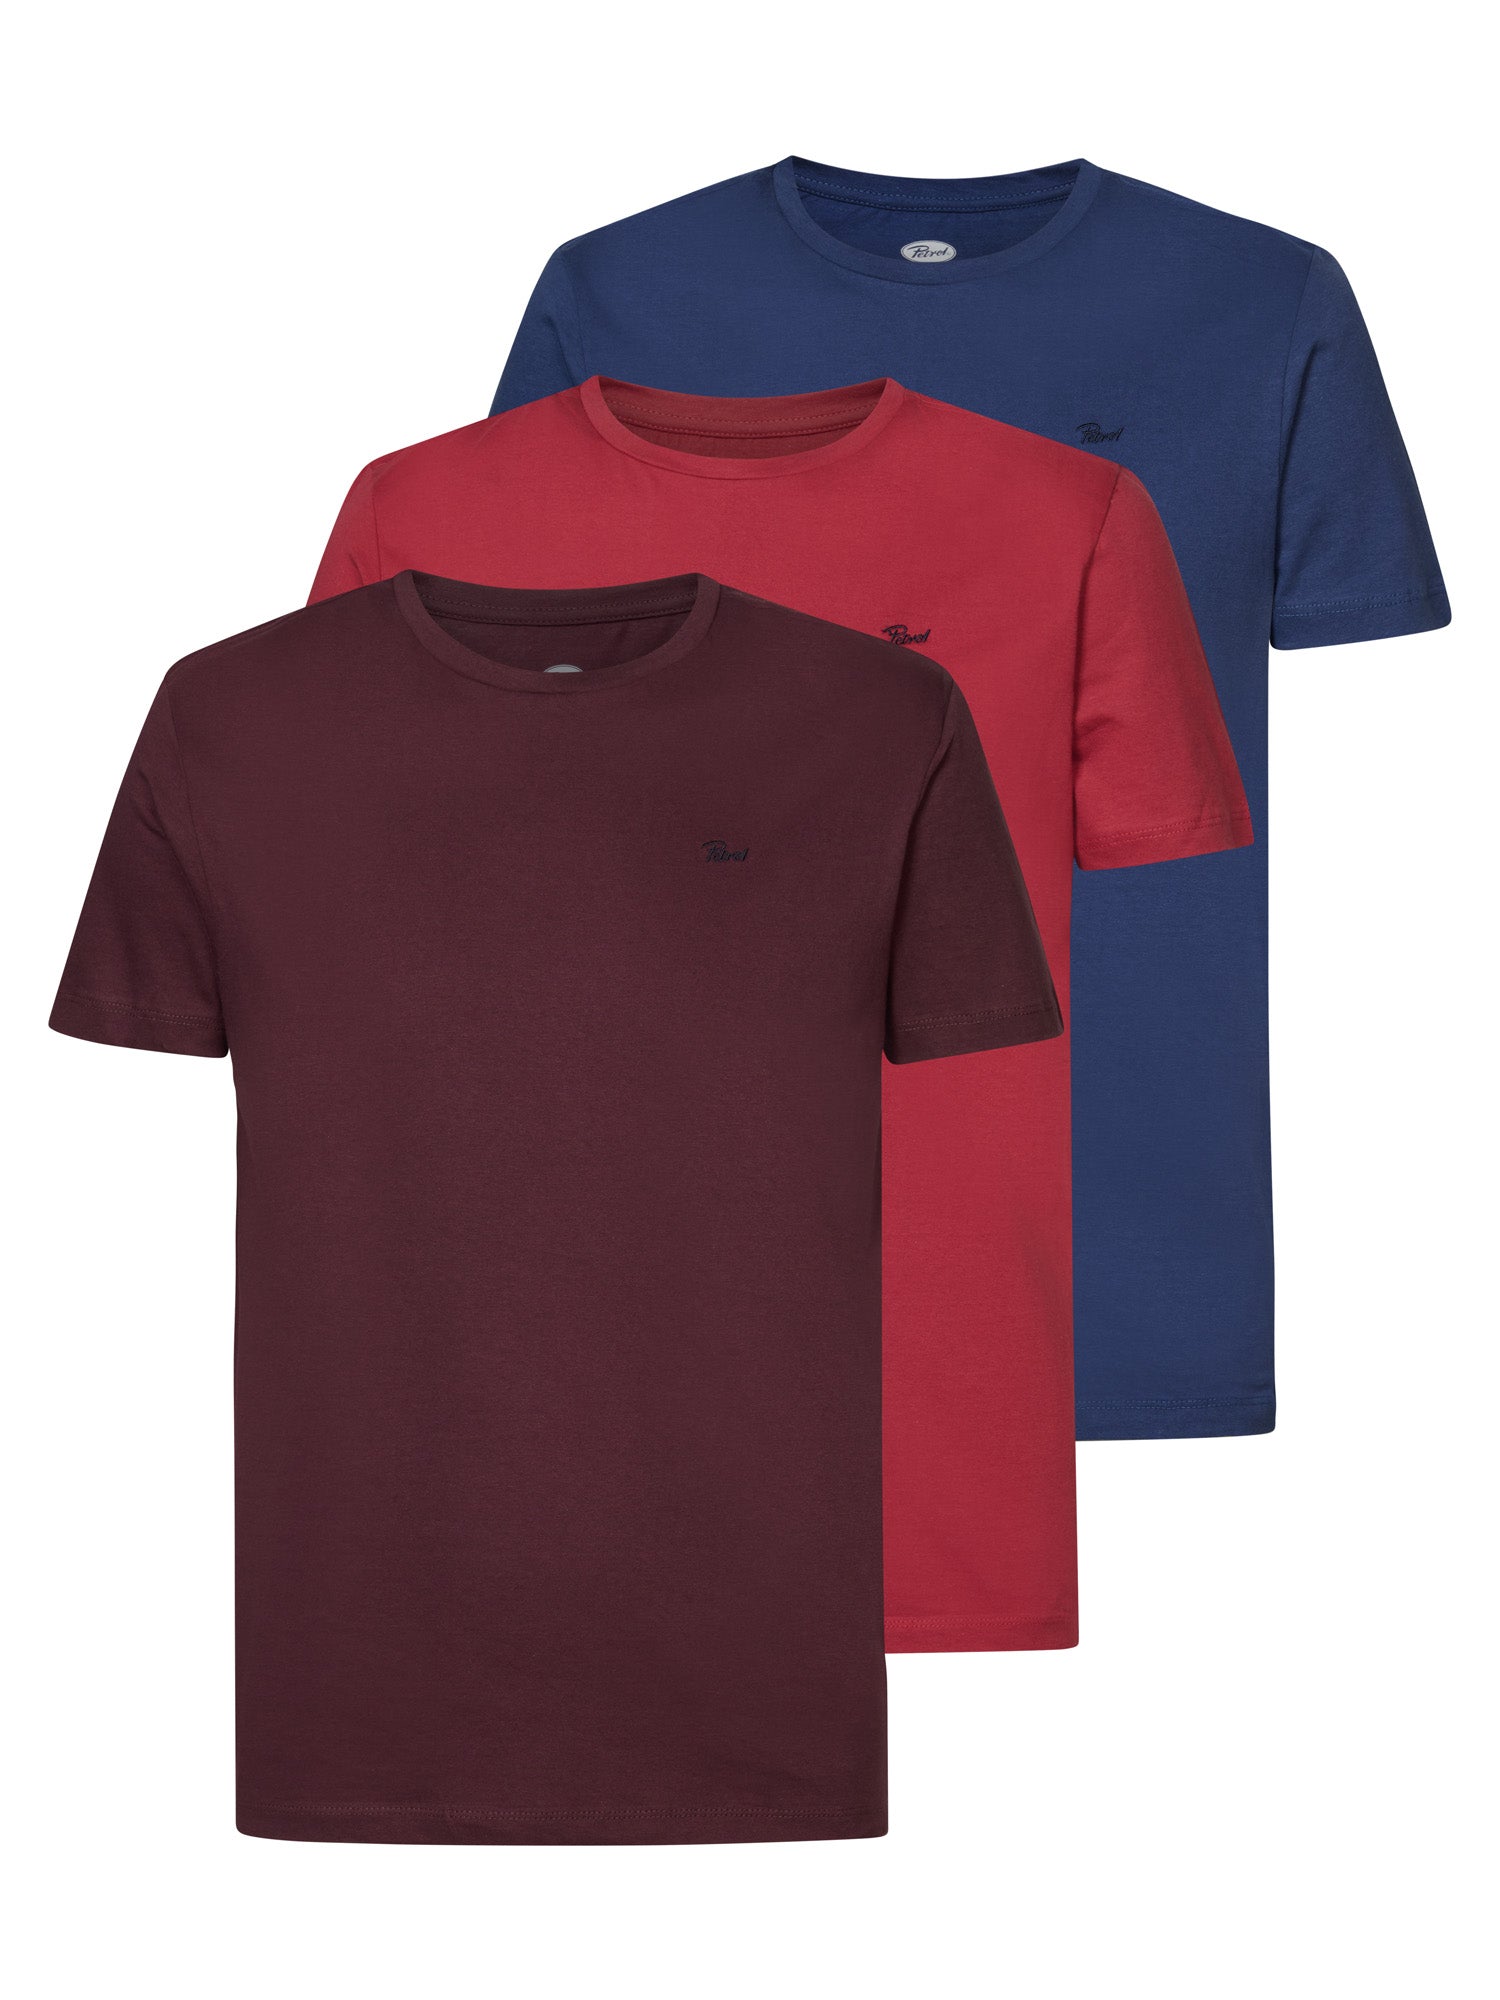 Petrol Industries 3 Pack T Shirt Burgundy/Red/Blue - S